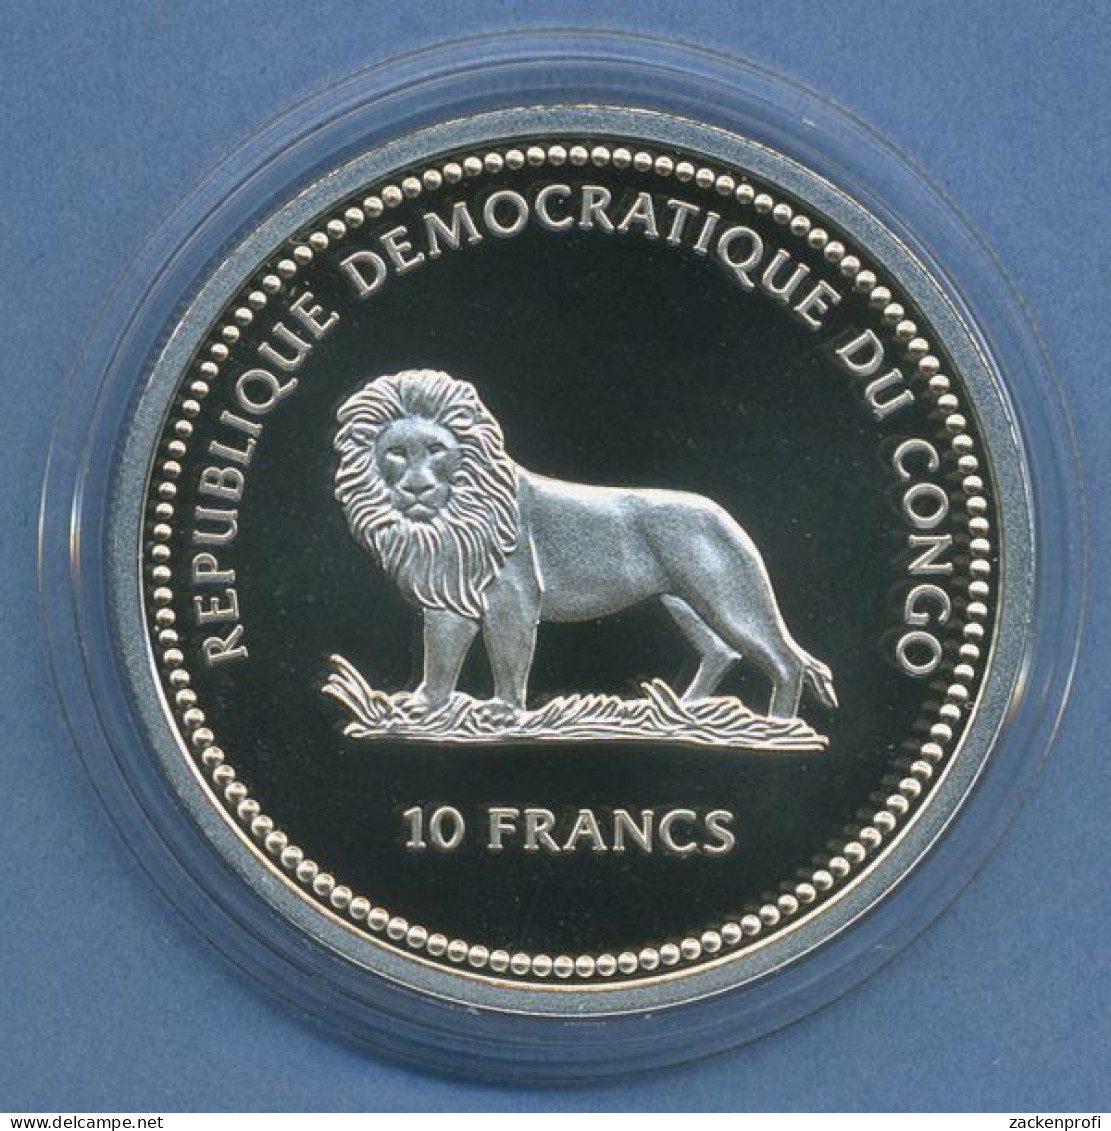 Kongo 10 Franc, 2000 Tierschutz Fische, Silber, Farbig, PP In Kapsel (m4417) - Congo (Democratic Republic 1998)